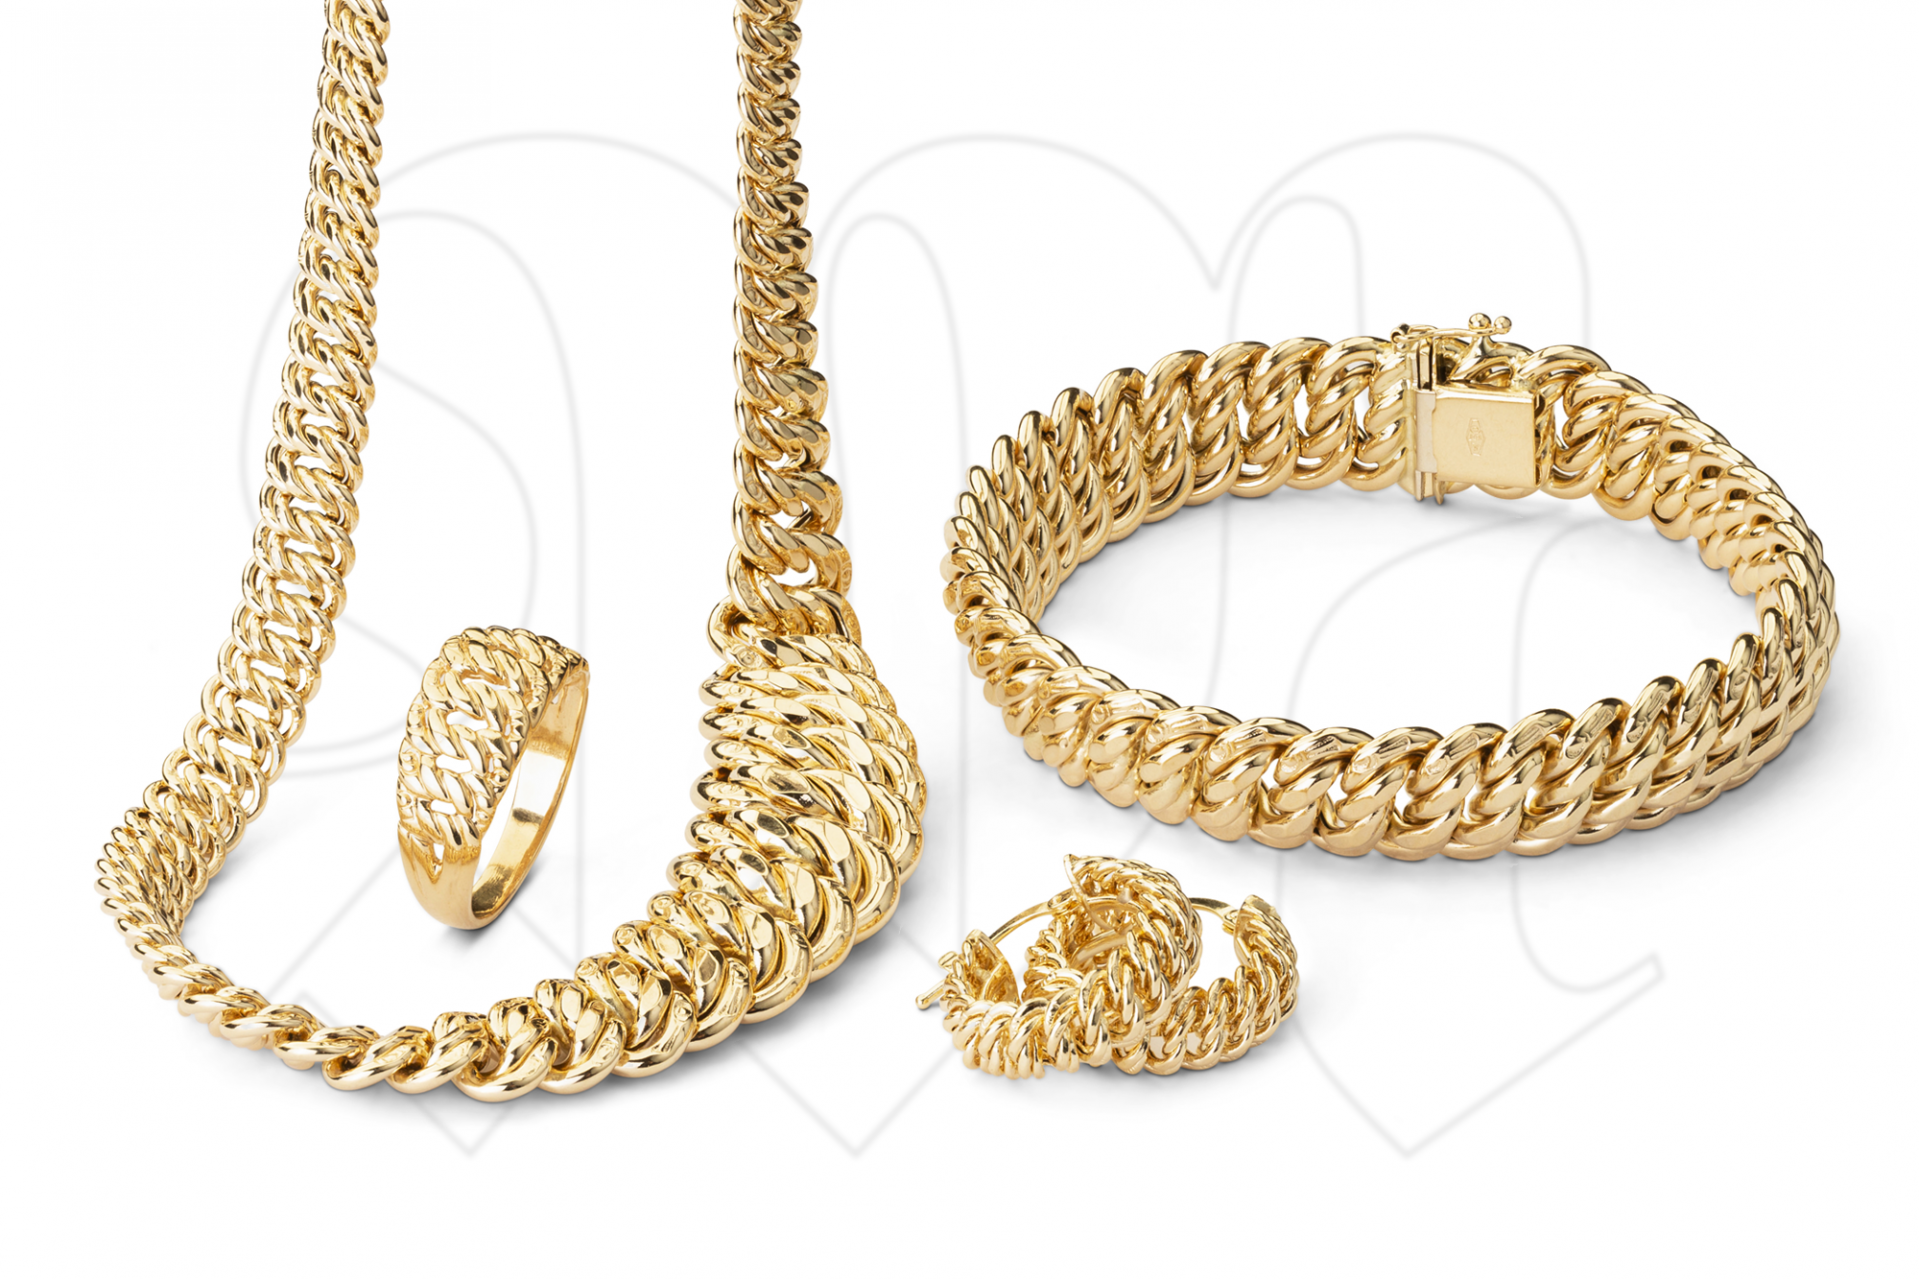 golden bracelet, ring, earrings and necklace